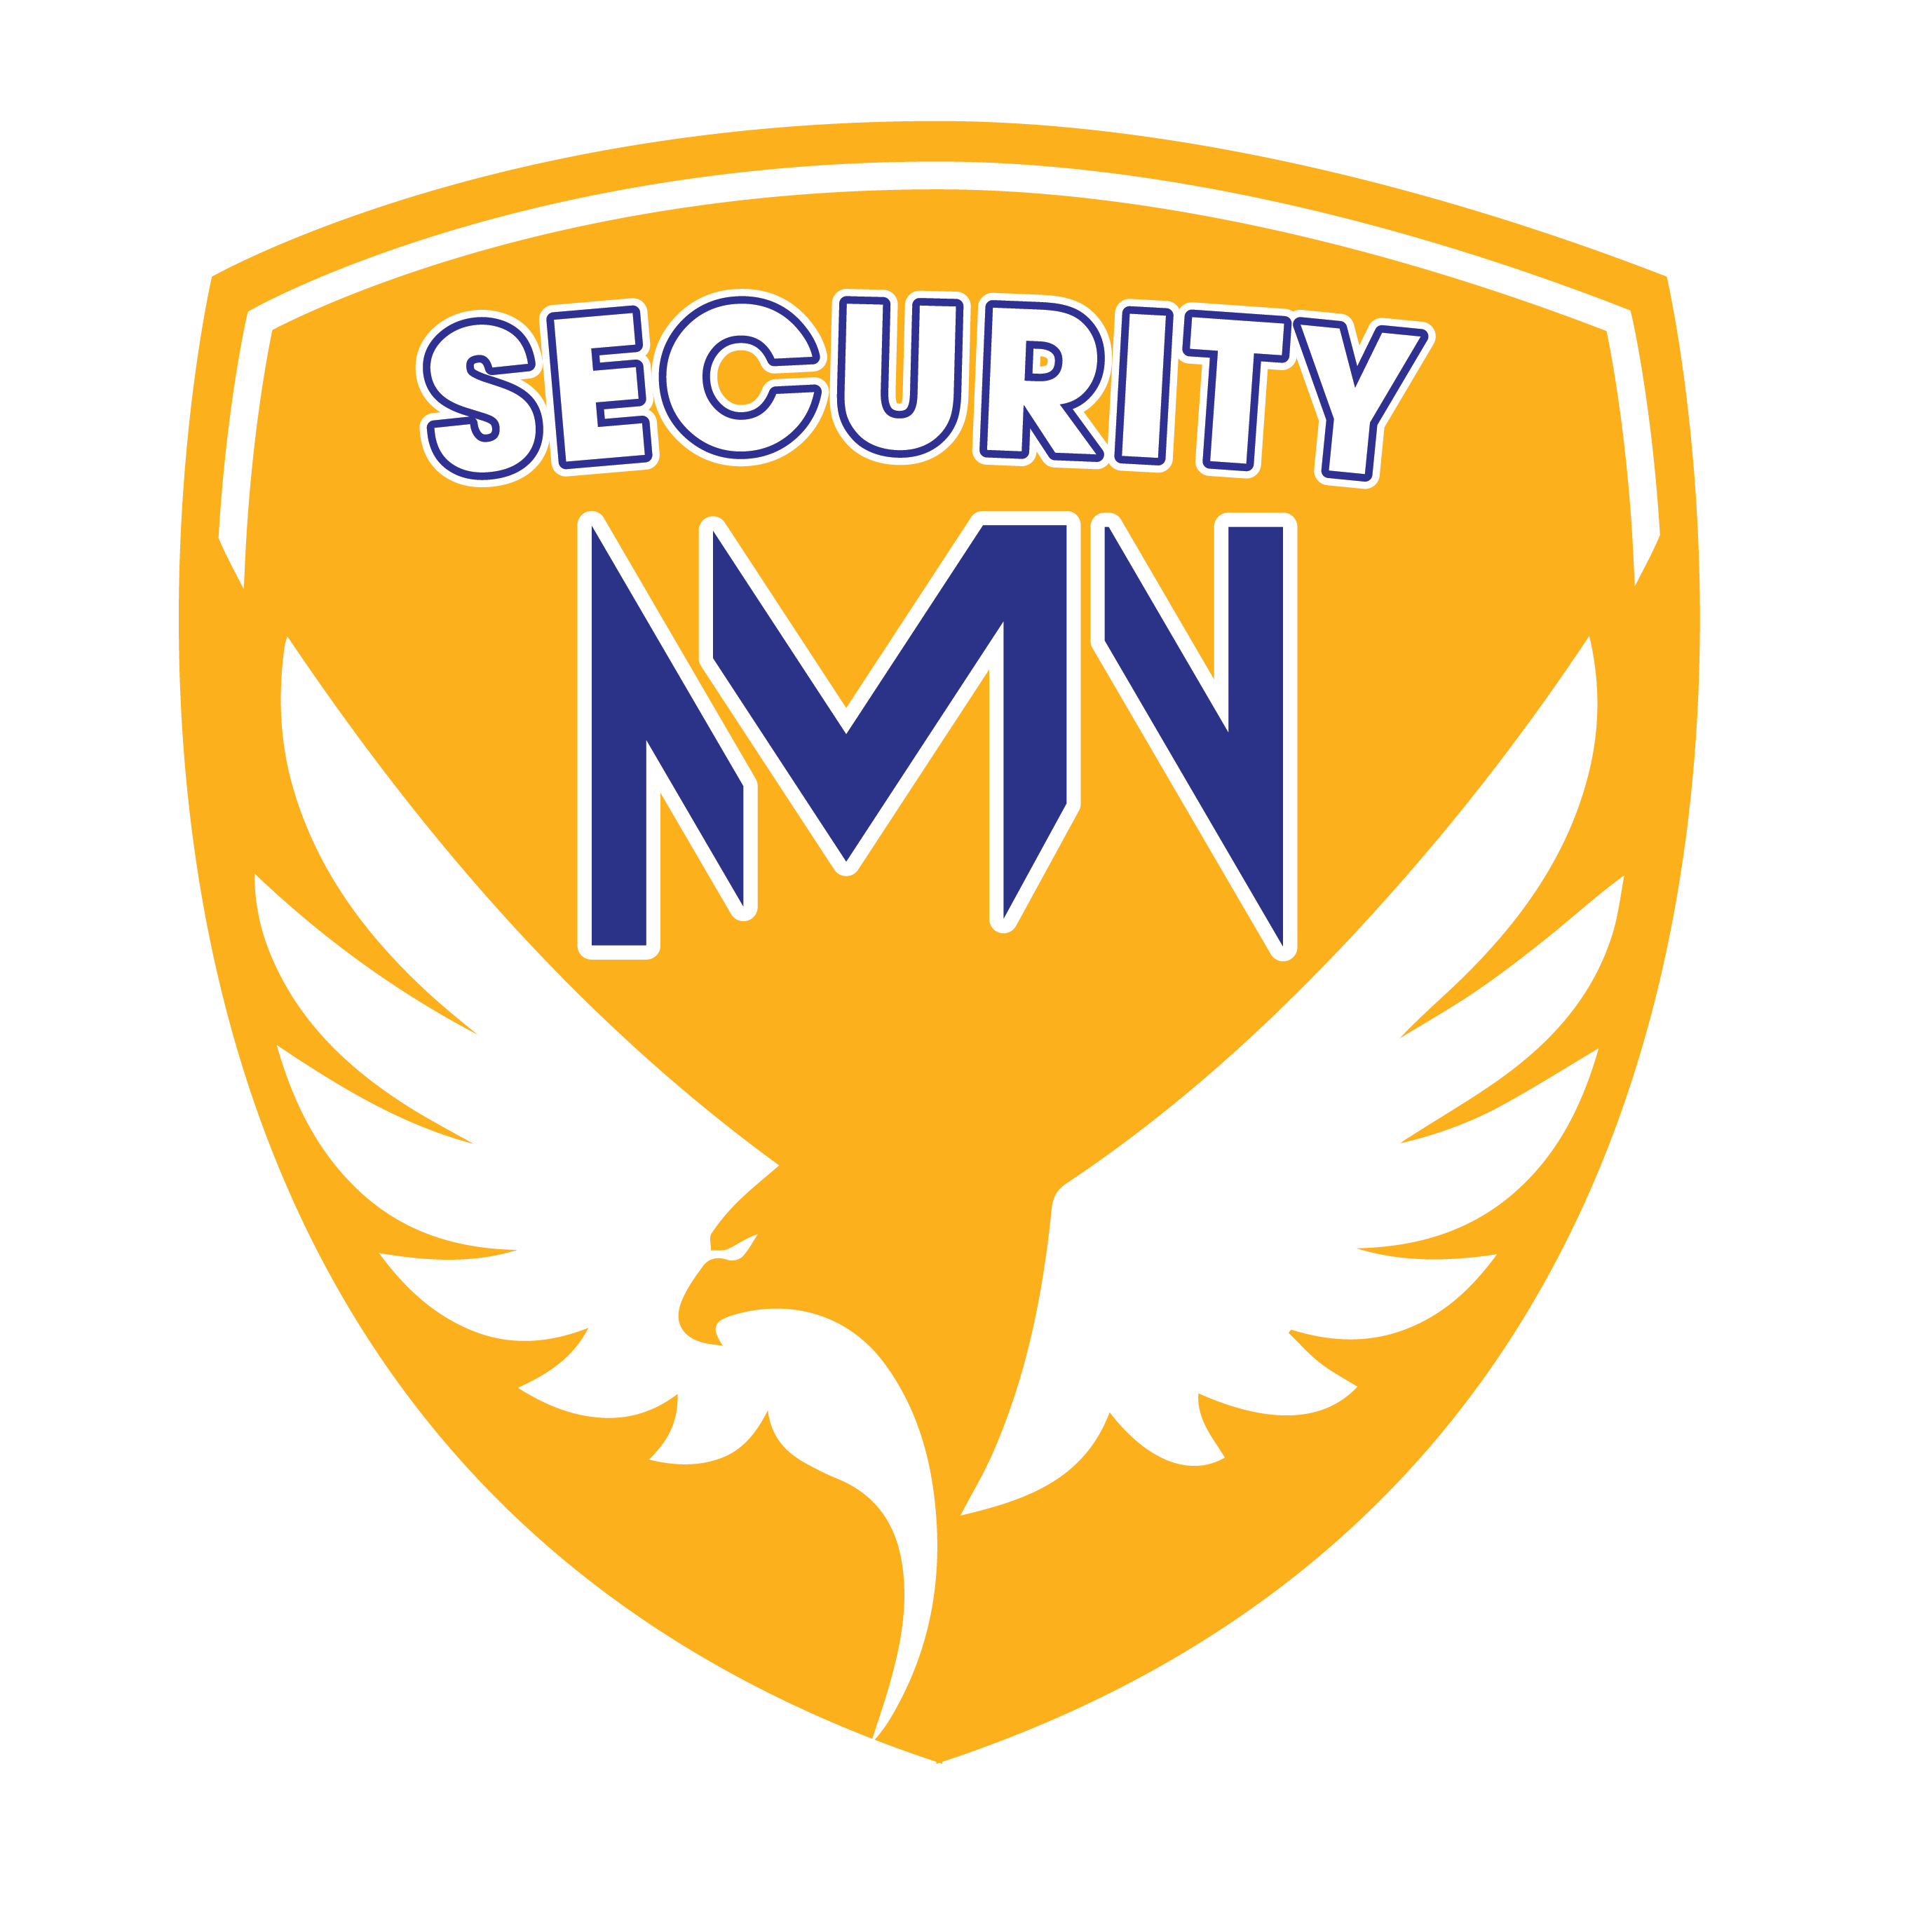 nmn security